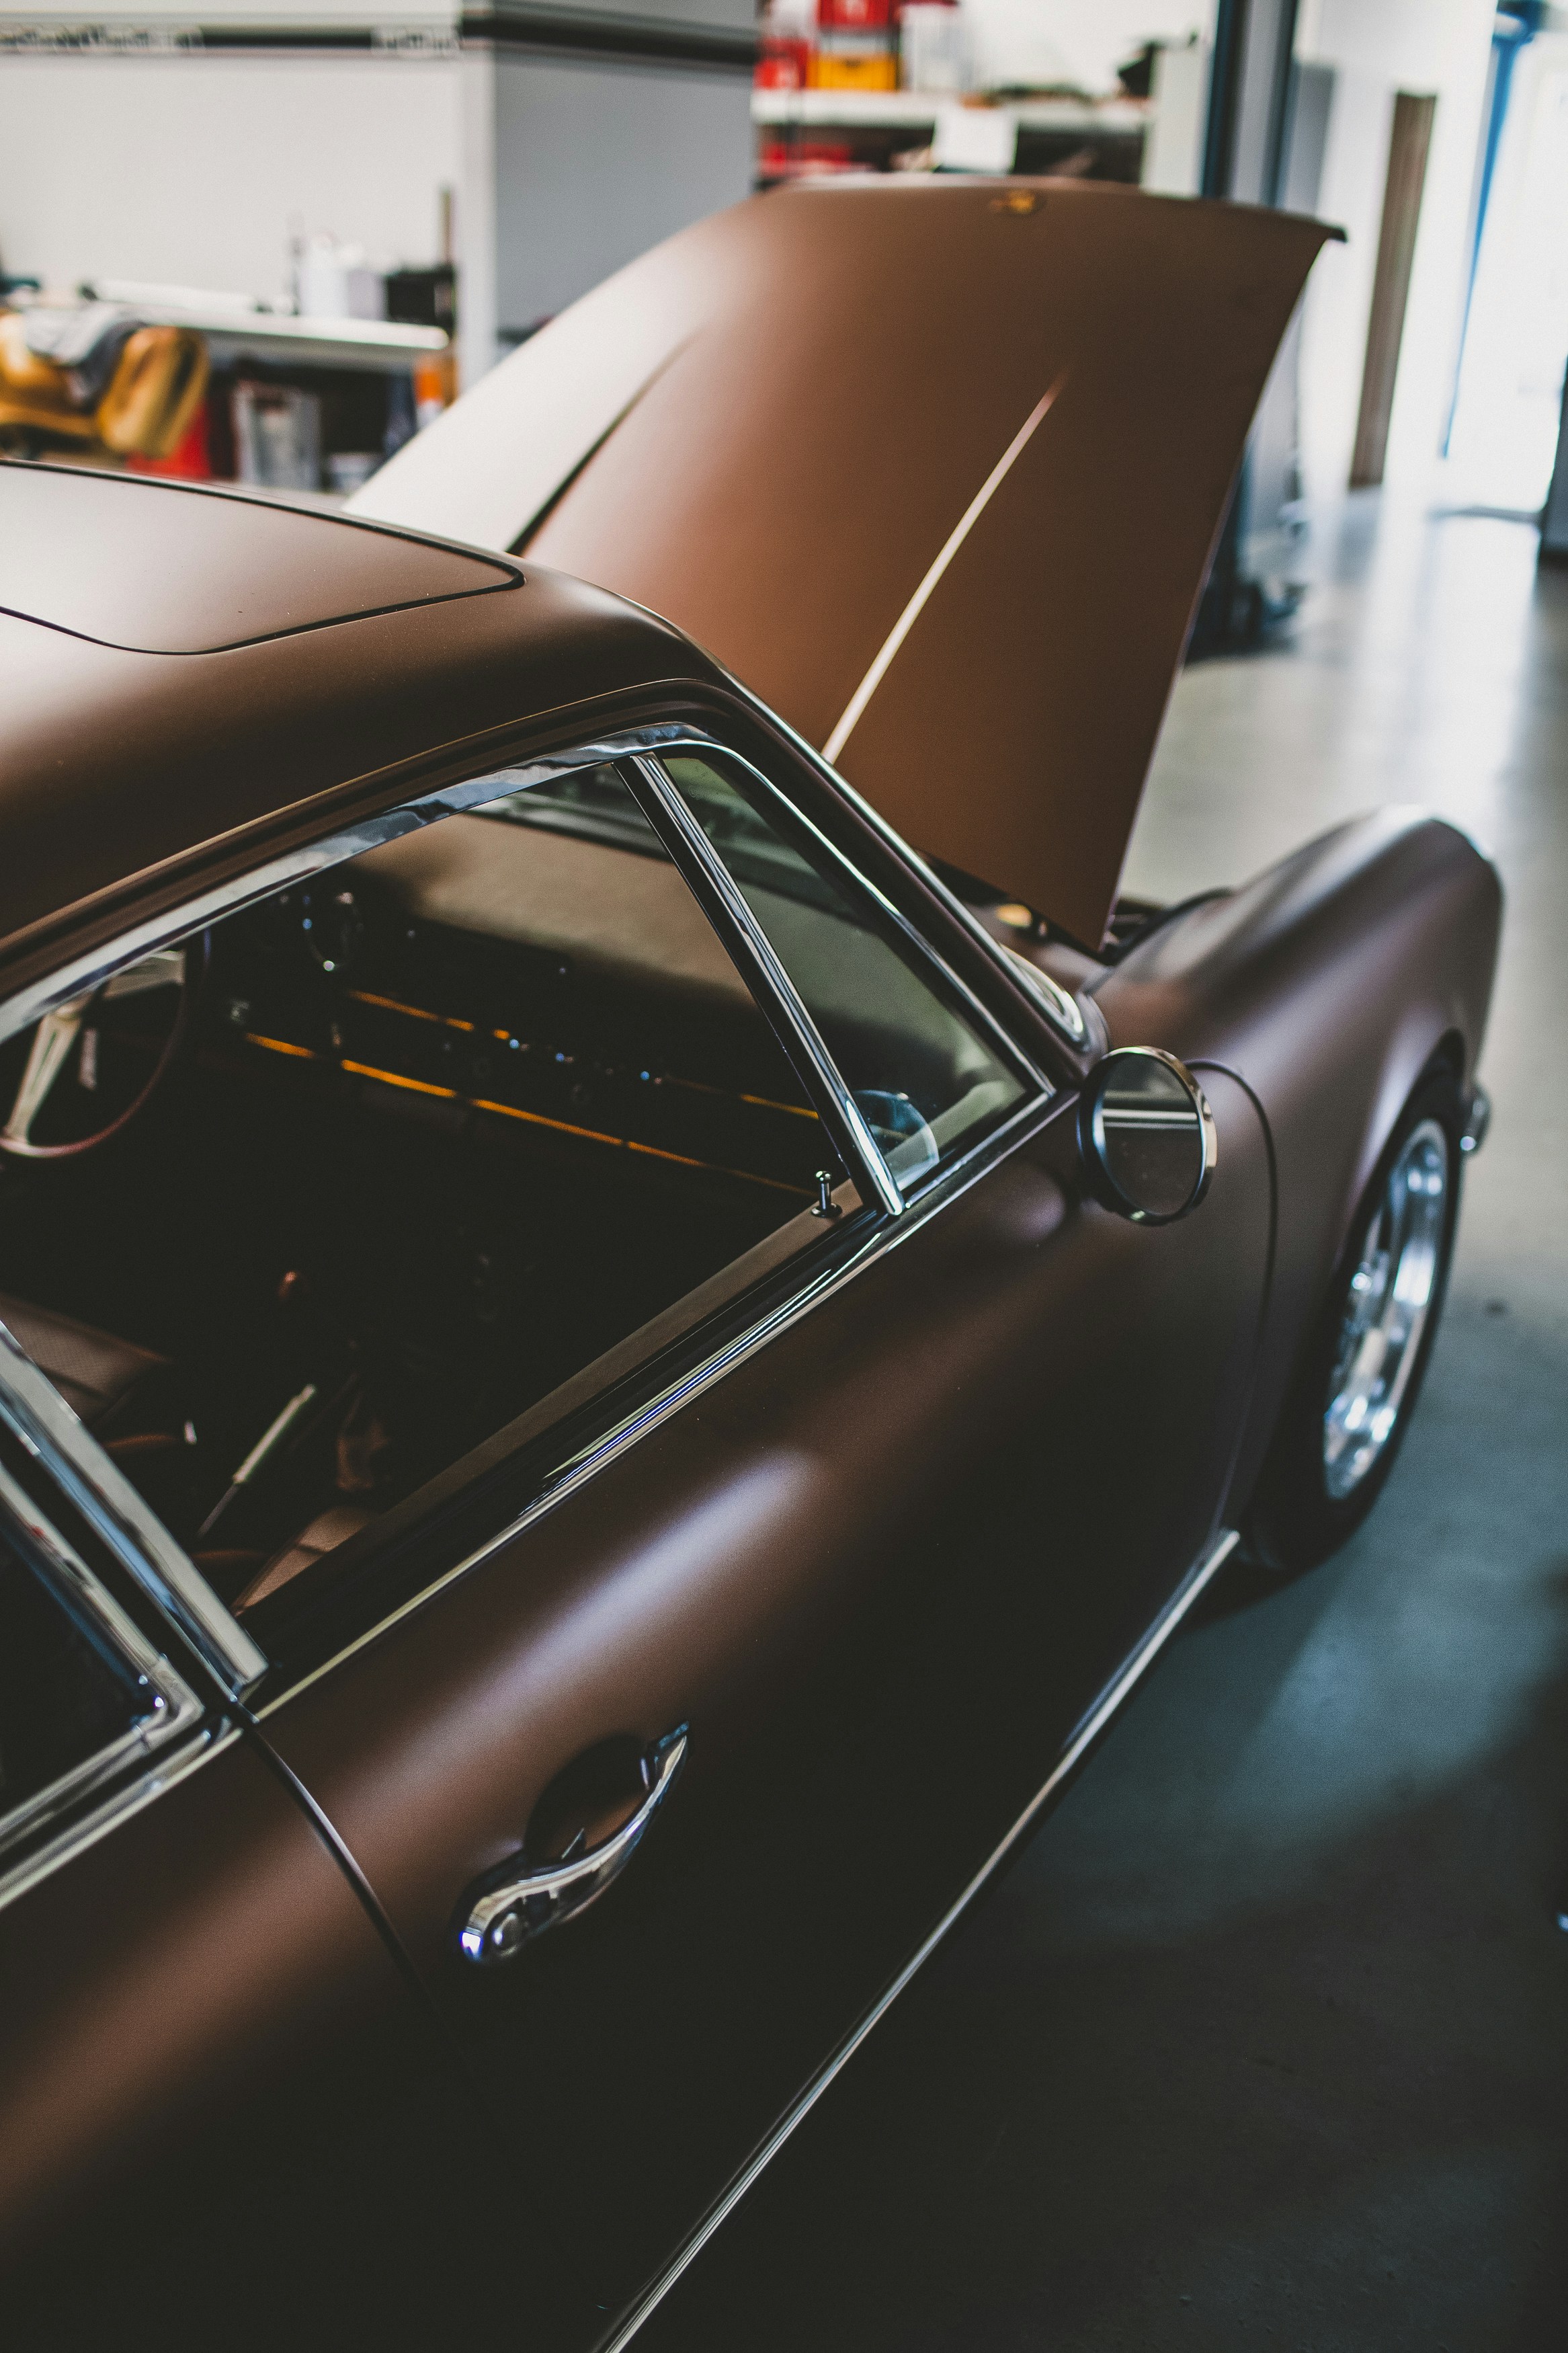 Vintage classic oldtimer sports car - iconic legendary Porsche 911 (Backdating)